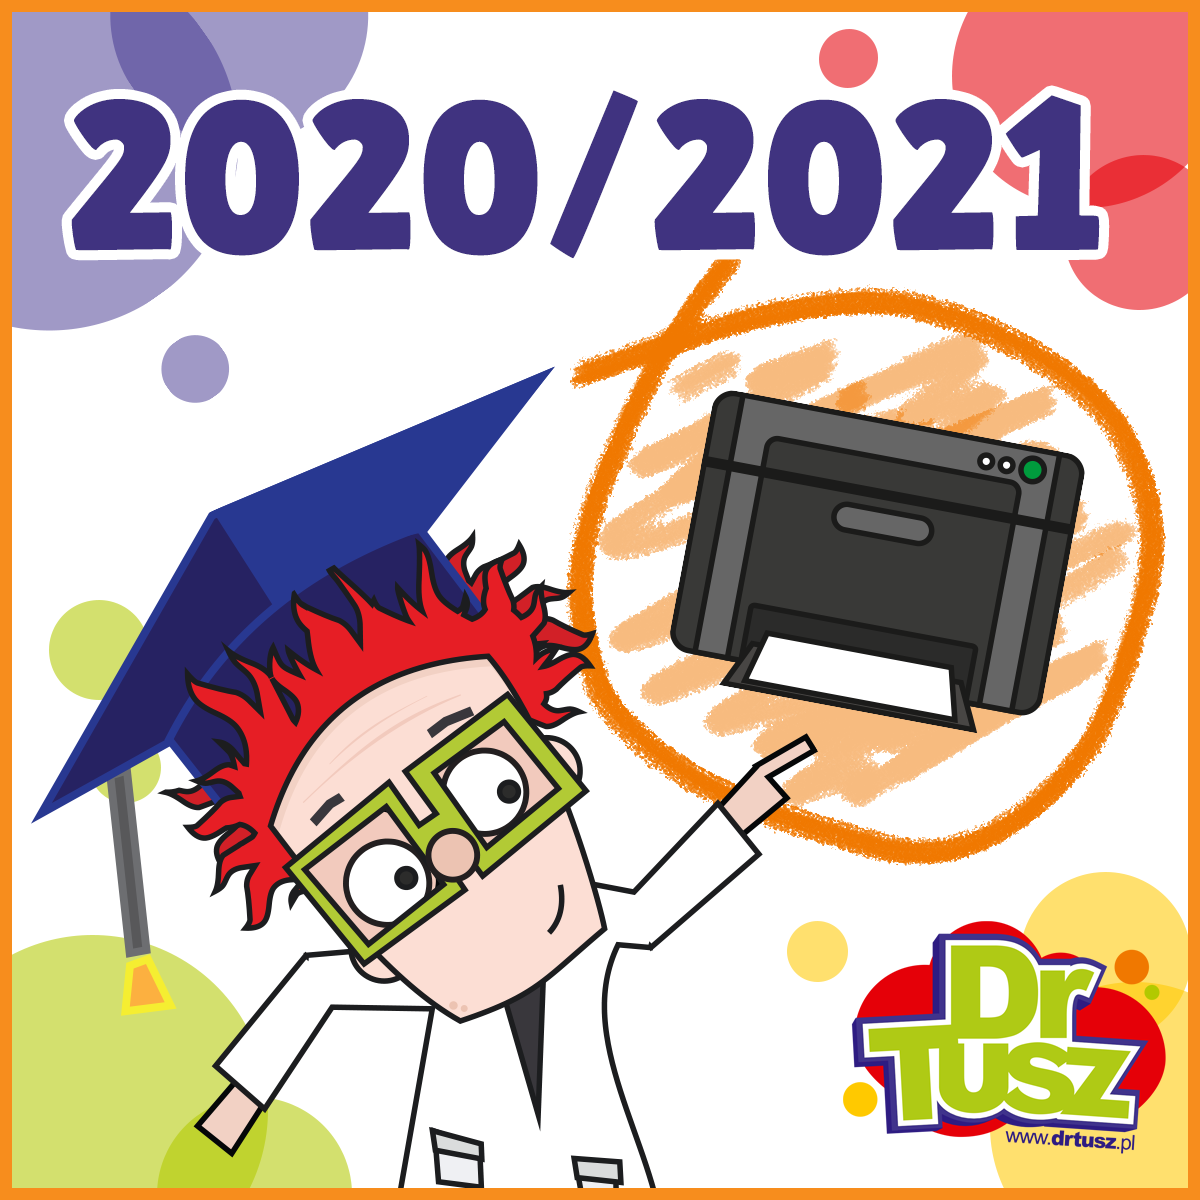 3 drukarki dla studenta na rok akademicki 2020/2021